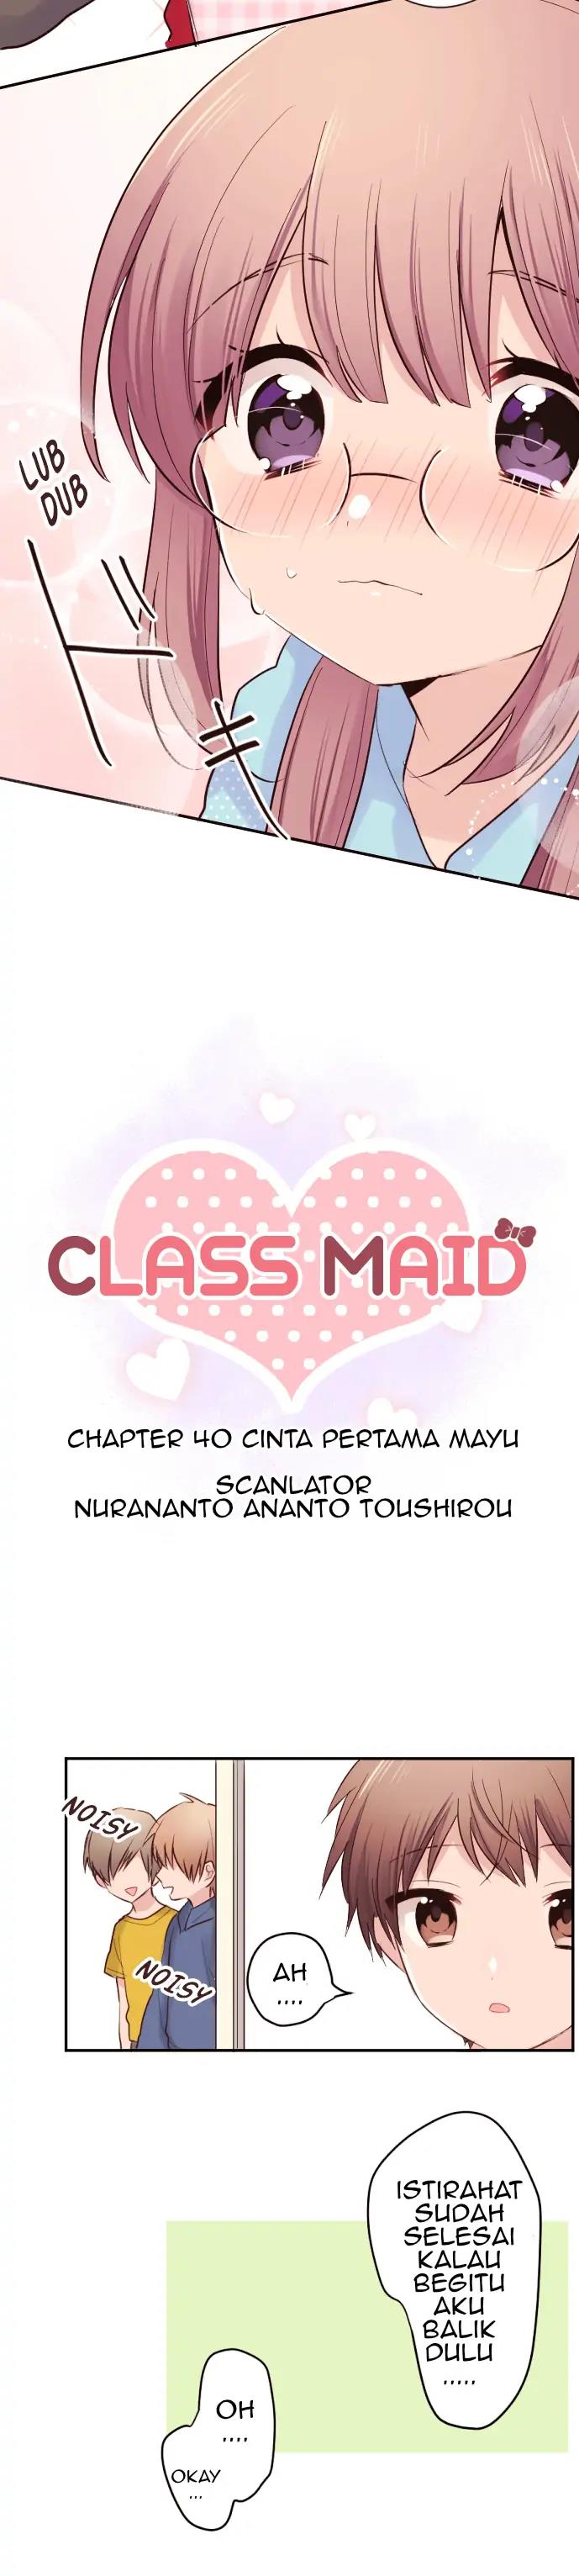 Class Maid (Shimamura) Chapter 40